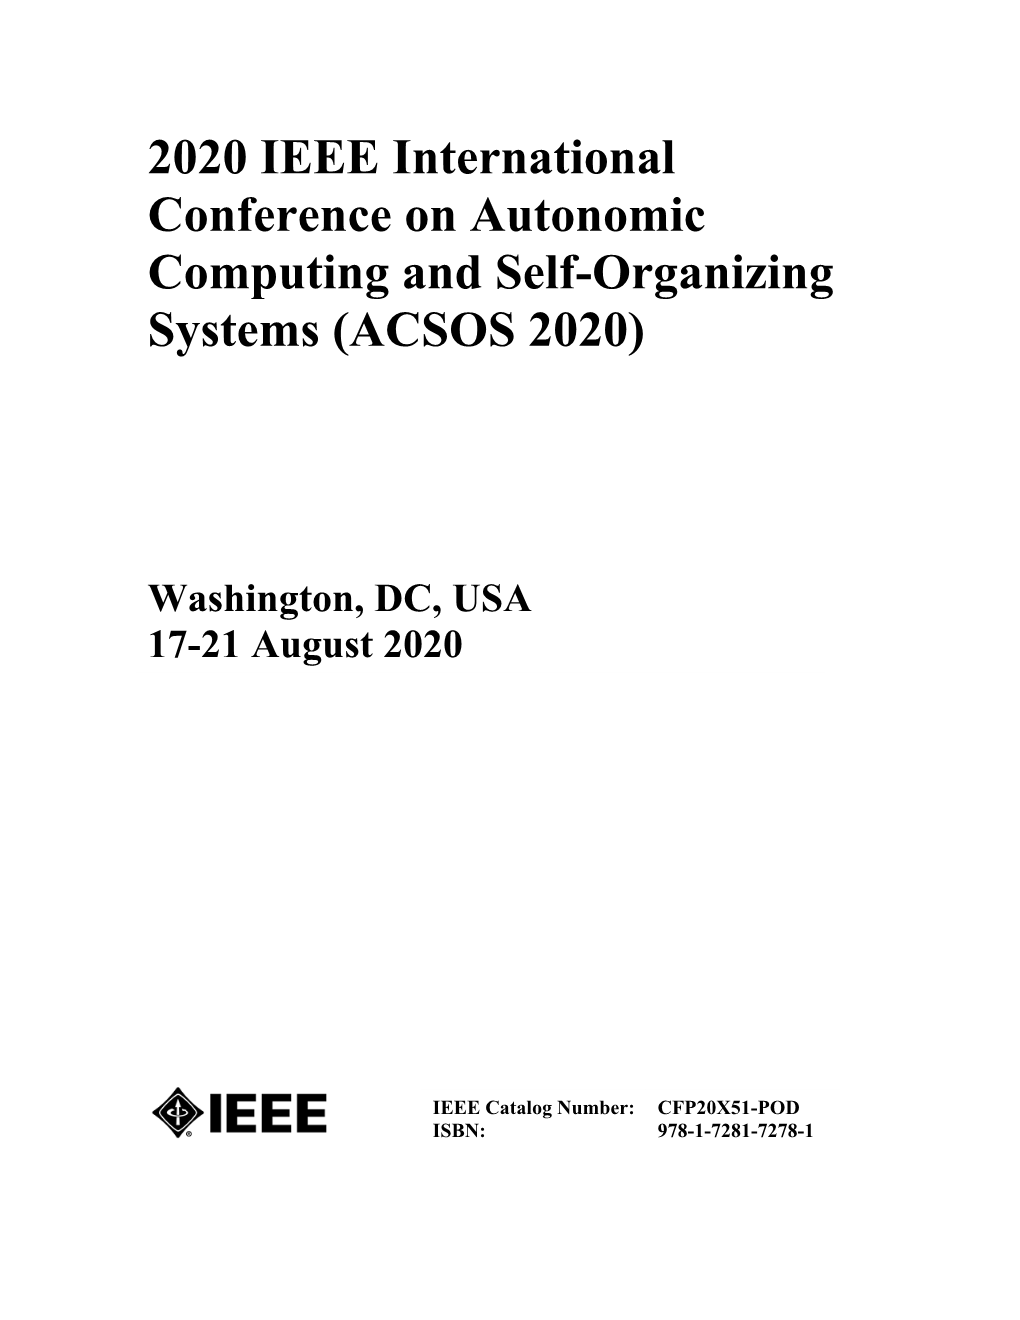 2020 IEEE International Conference on Autonomic Computing and Self-Organizing